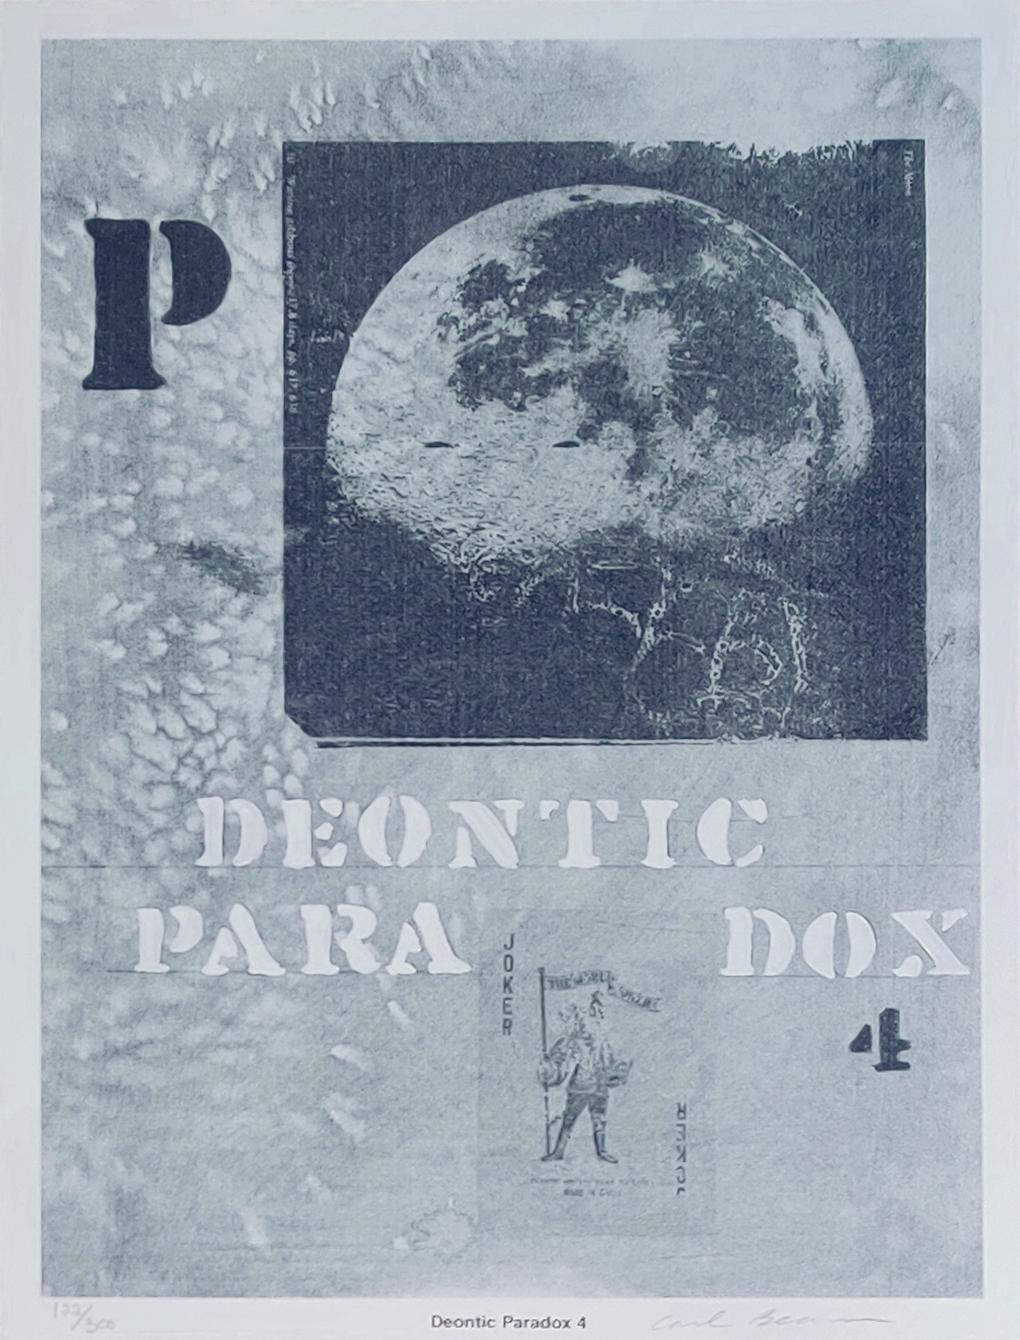 DEONTIC PARADOX 4